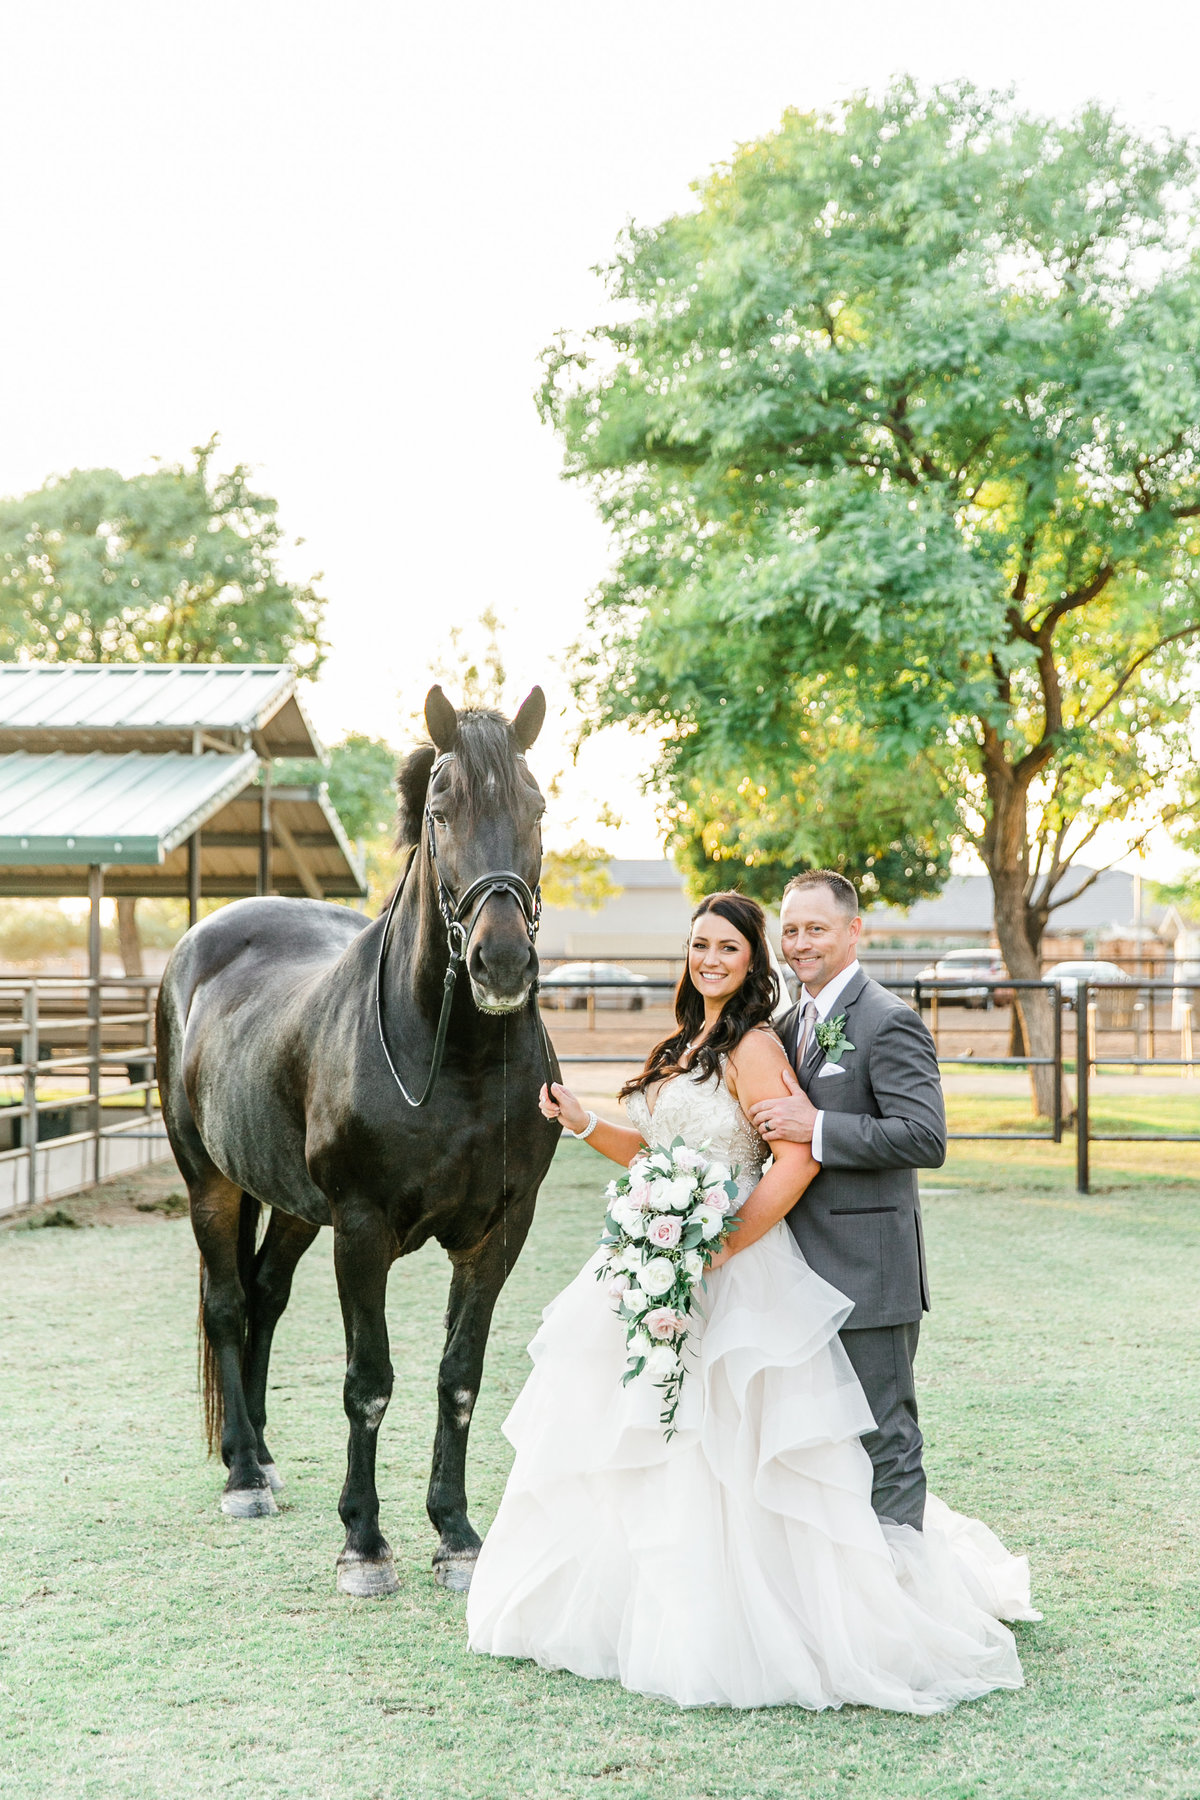 Karlie Colleen Photography - Glendale Arizona Backyard ranch wedding - Meghan & Ken-486